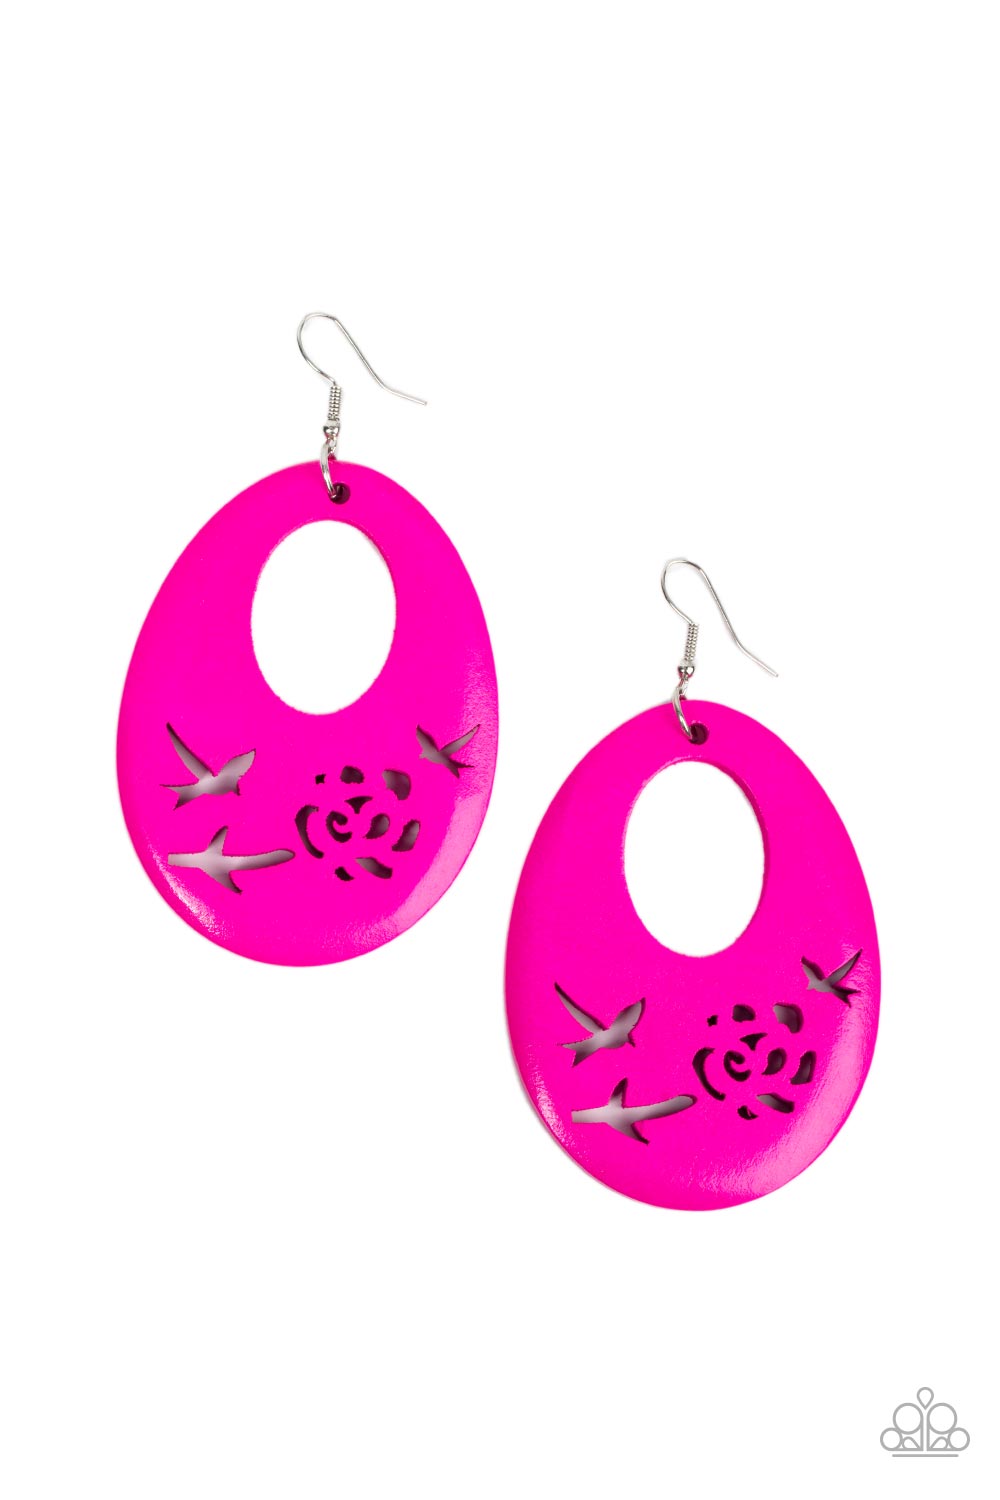 Paparazzi Earrings - Home Tweet Home - Pink